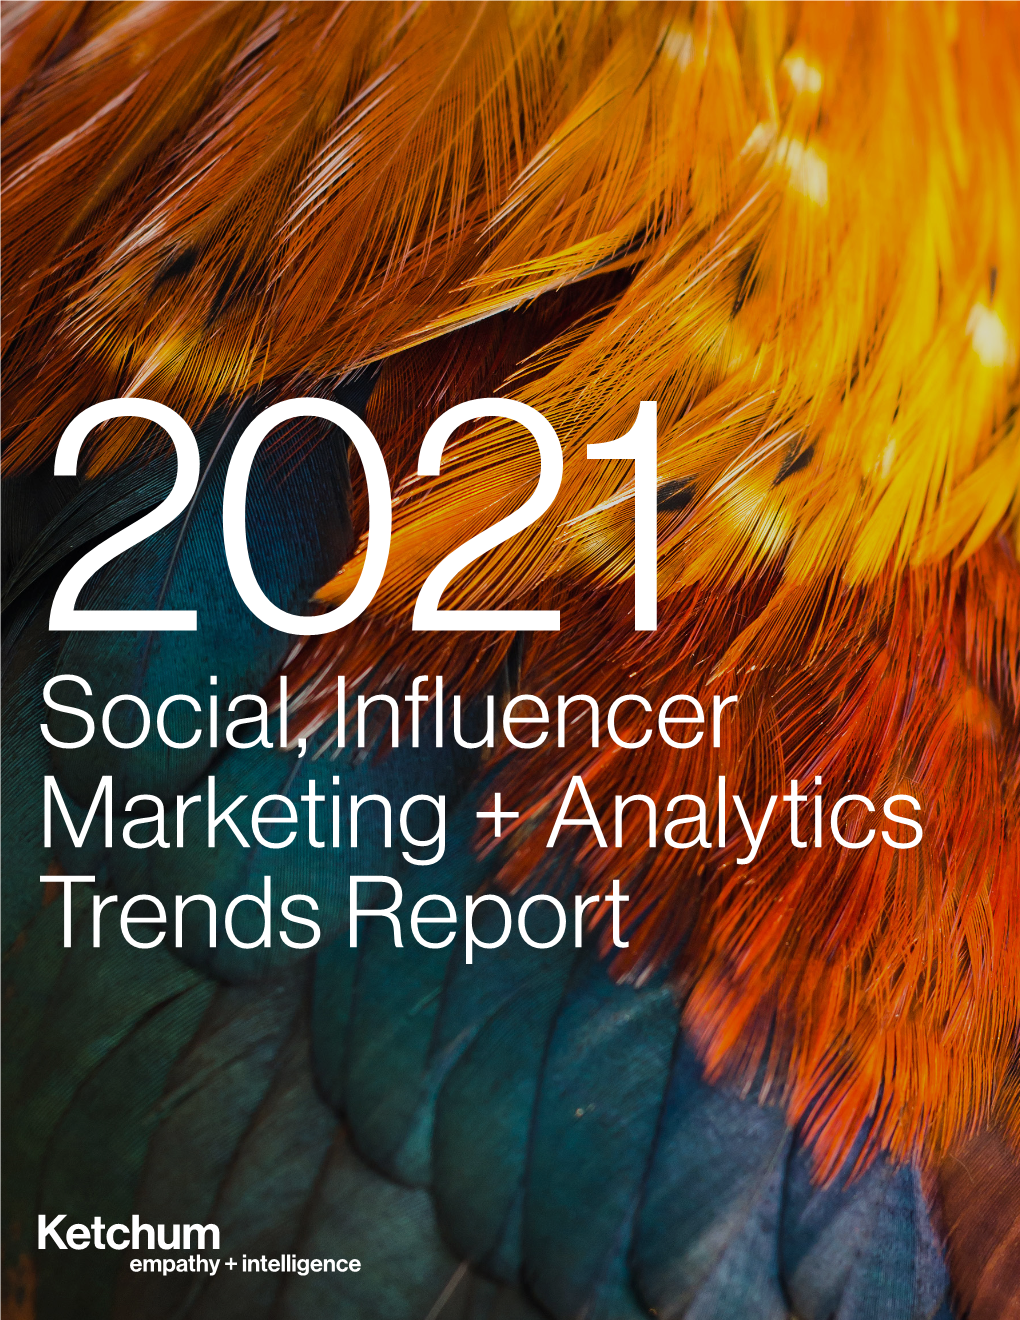 Social, Influencer Marketing + Analytics Trends Report